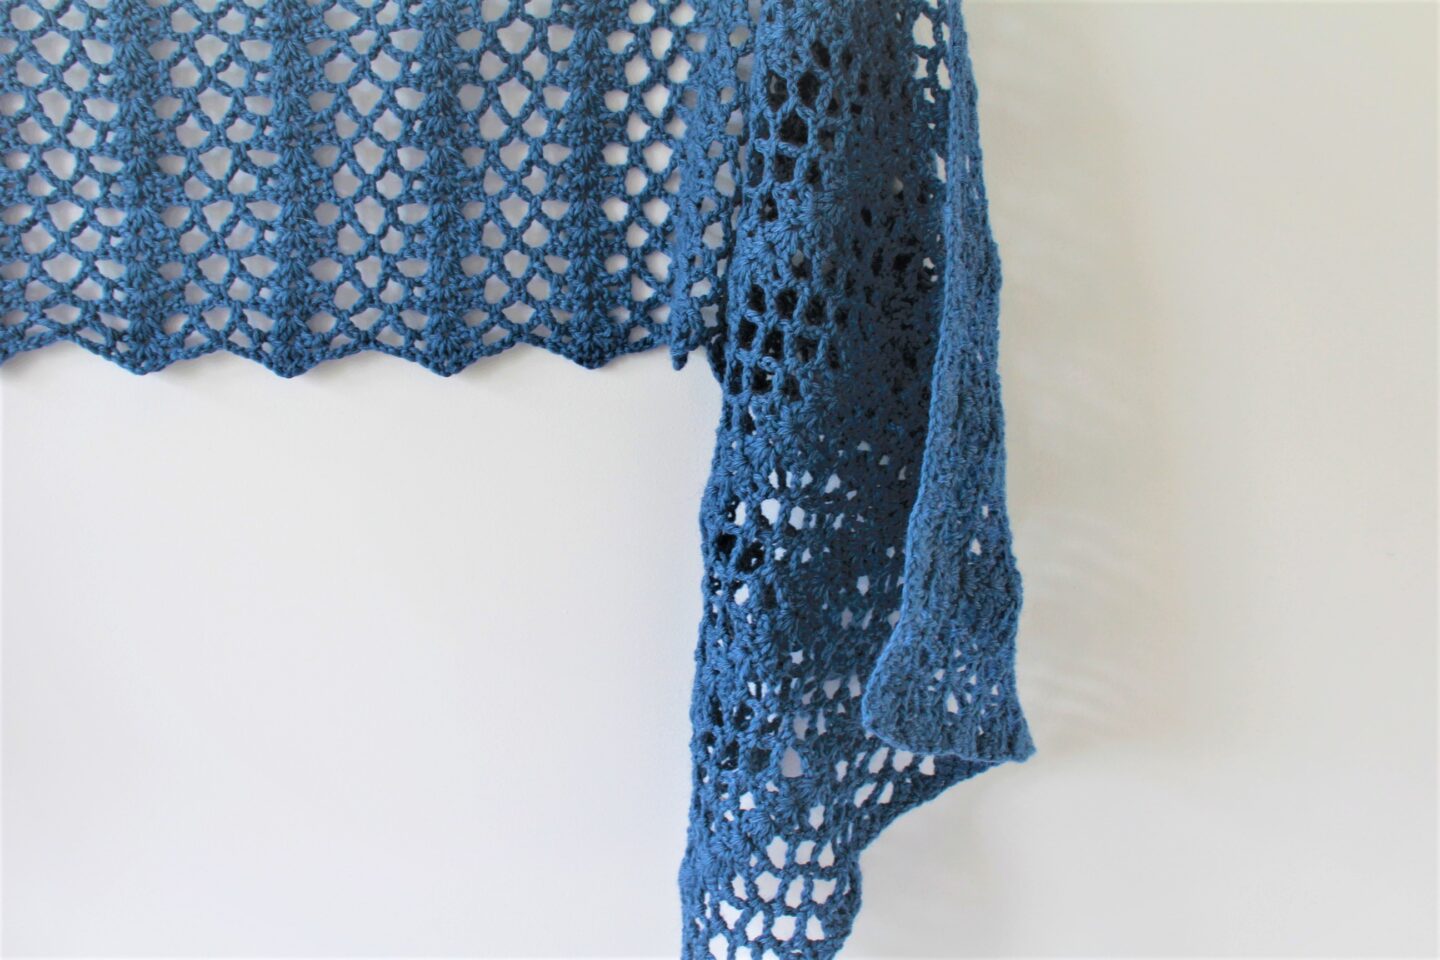 Close up of the lace shawl pattern